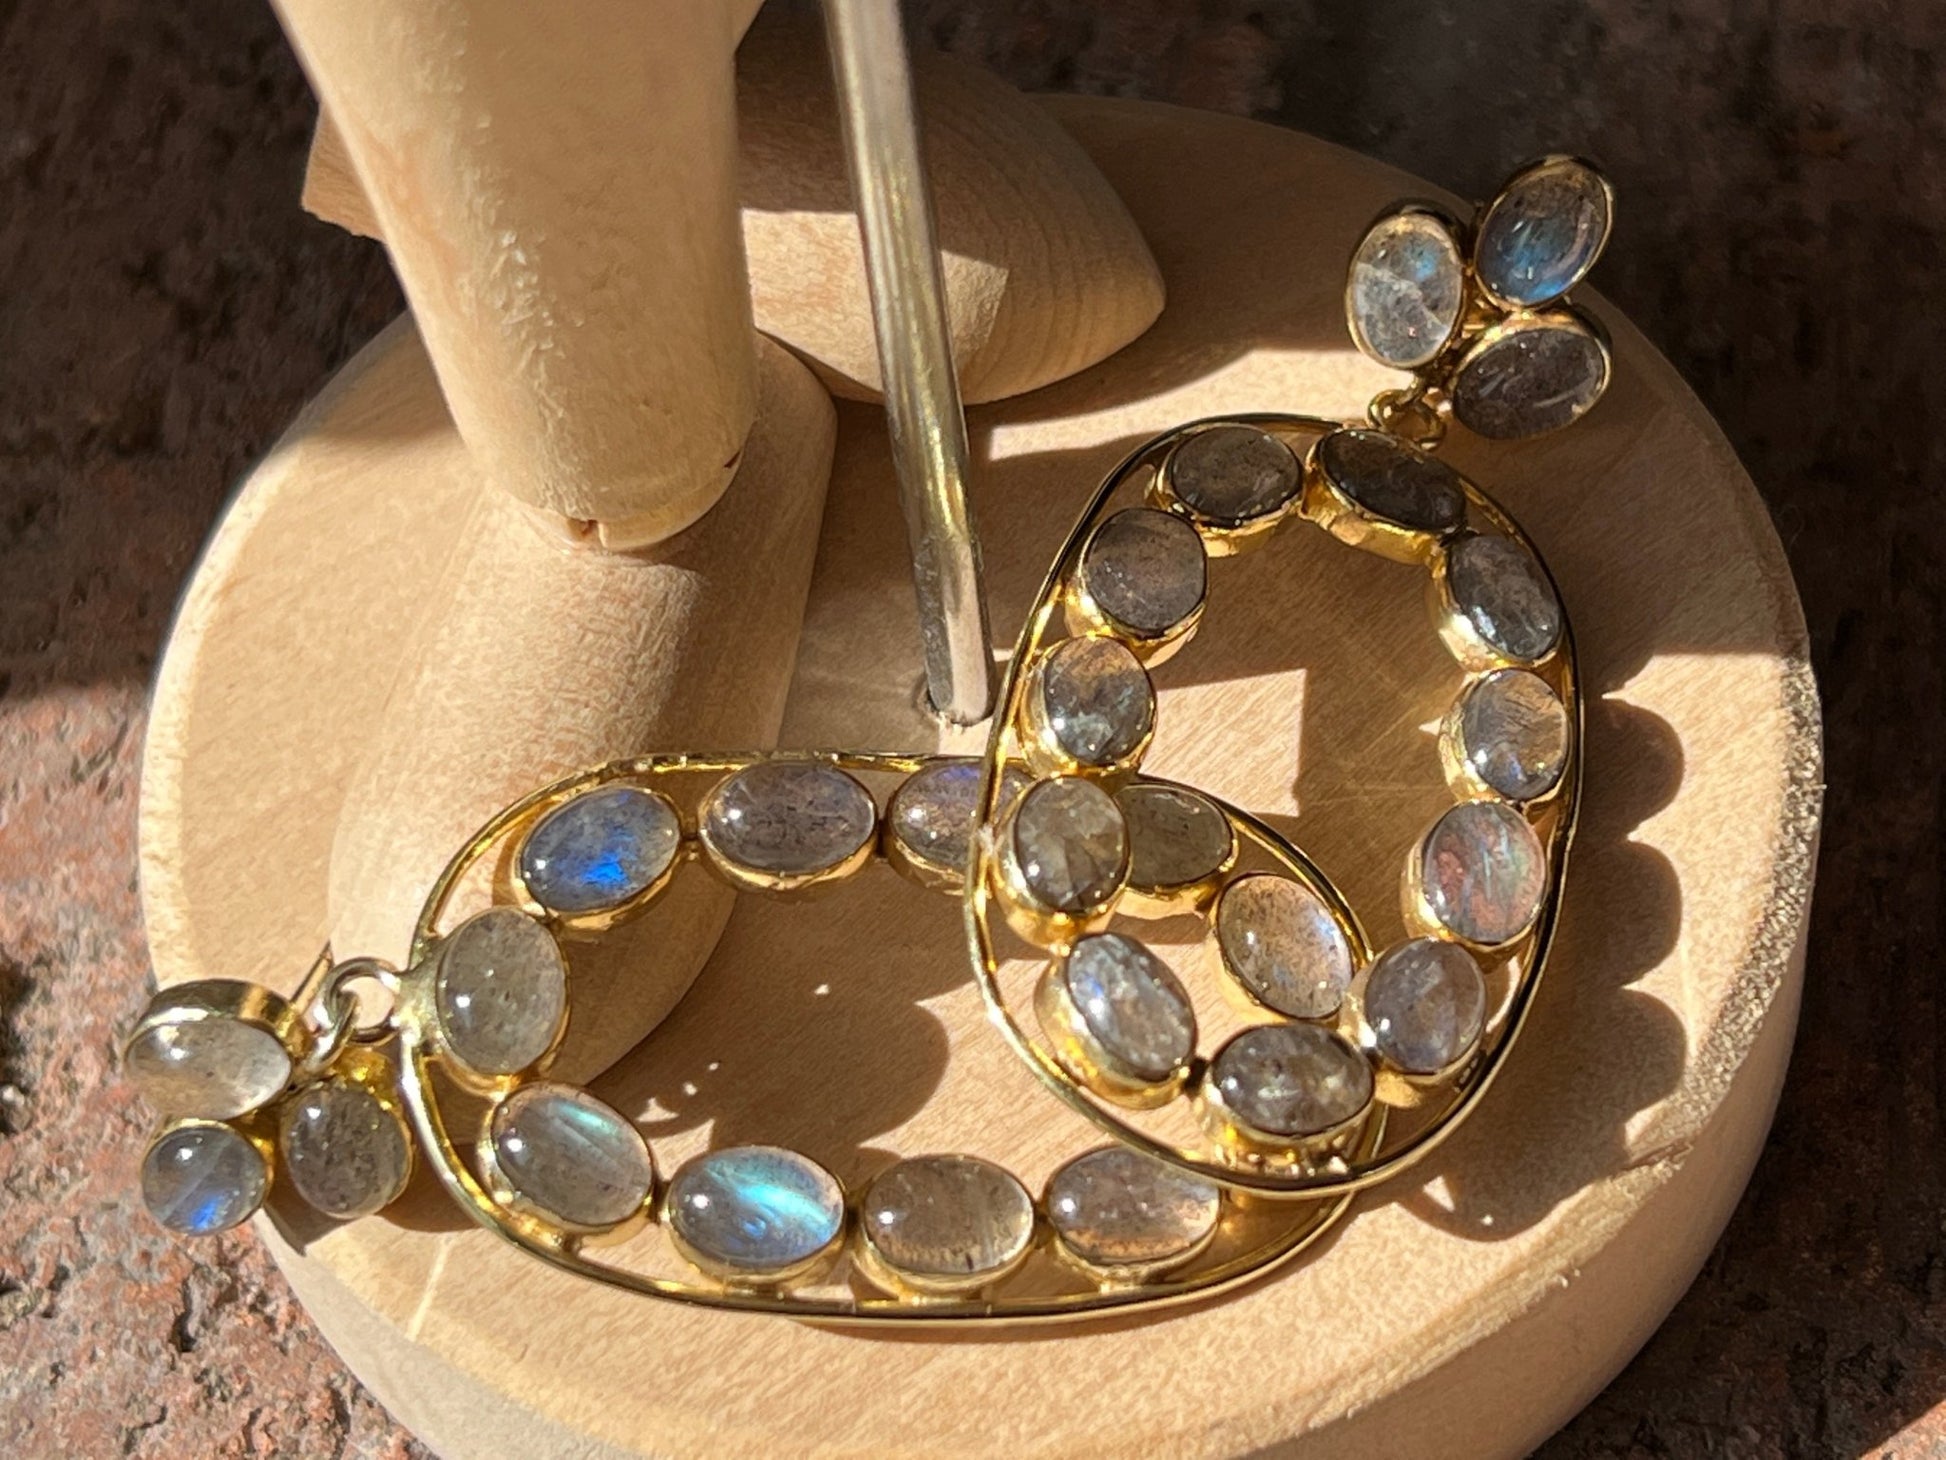 Shimmering ovals labradorite earrings with hoops - Sundara Joon